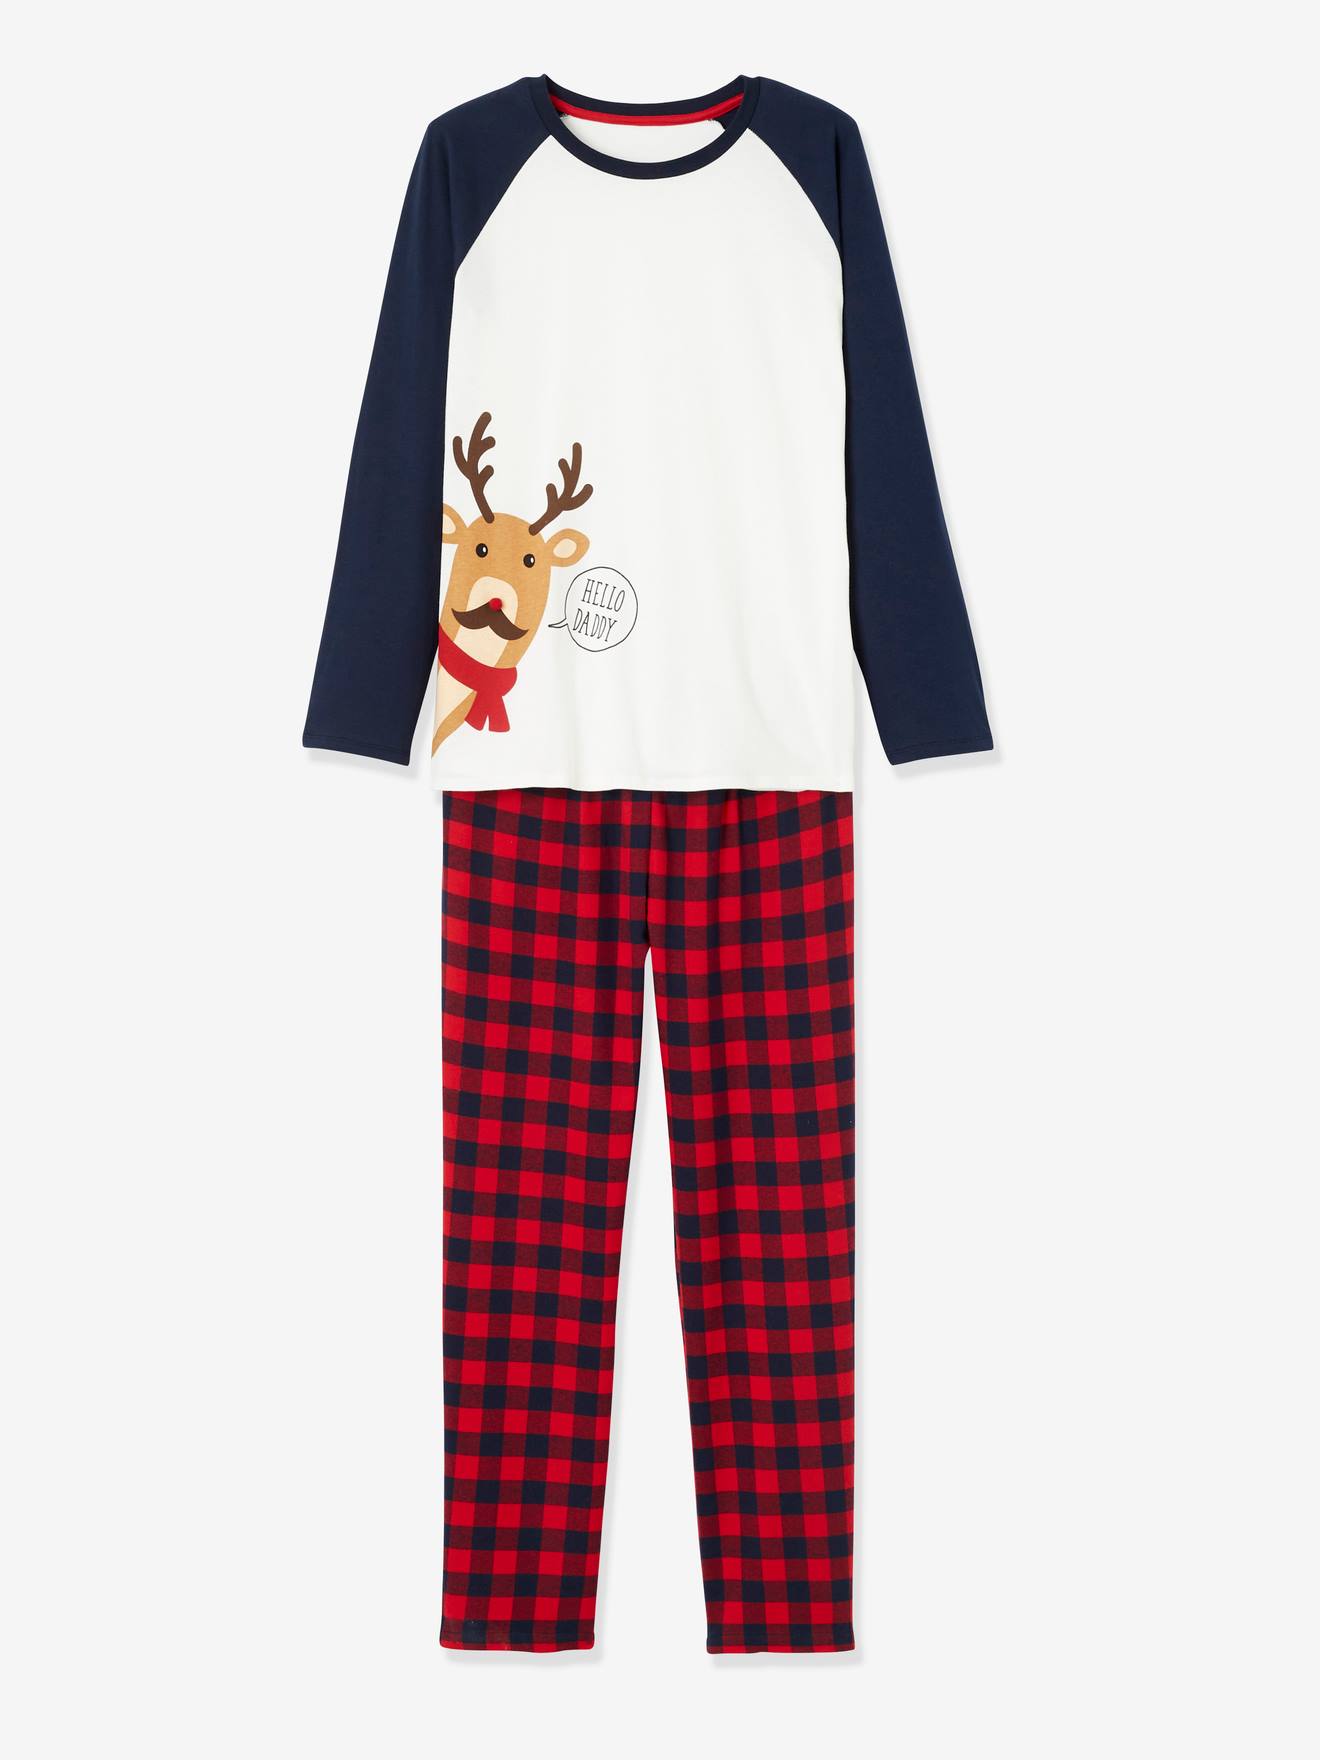 Pyjama Noël homme / Pyjama famille beige / carreaux